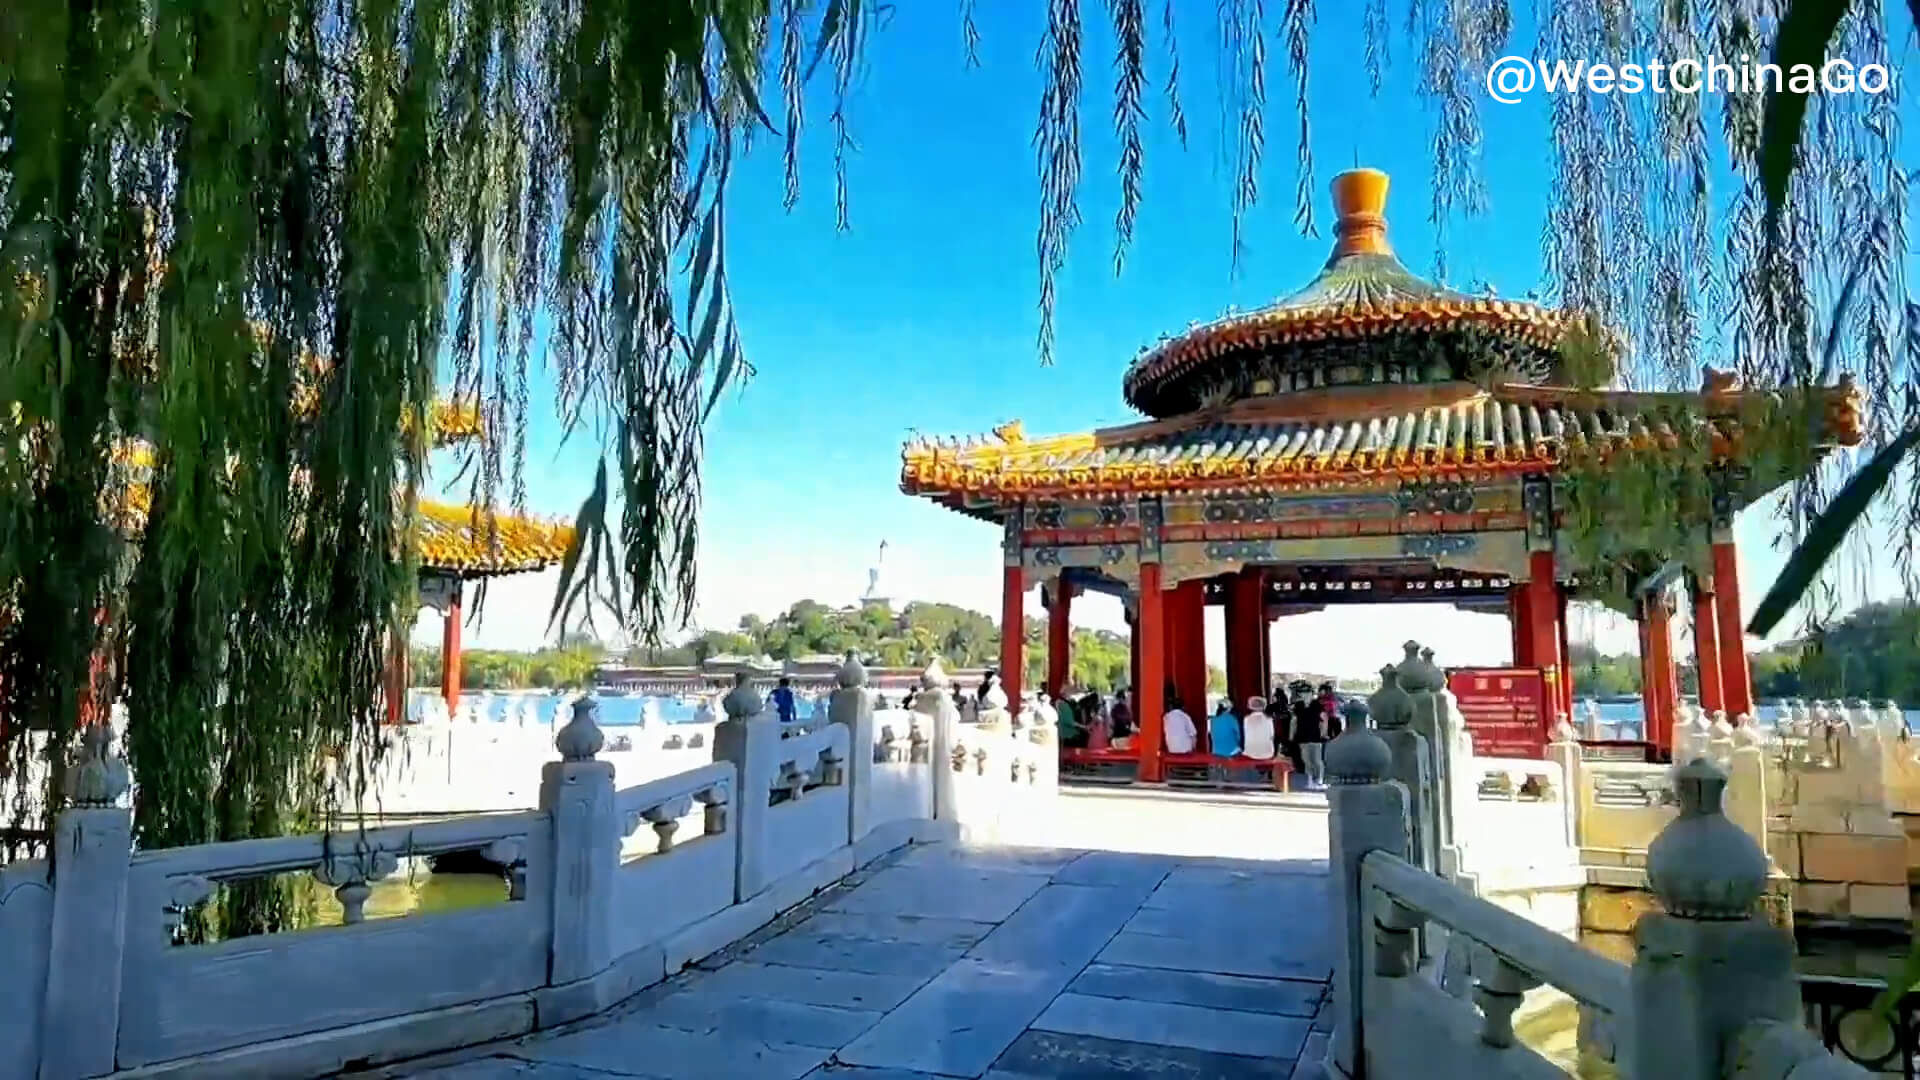 Beihai Park,Beijing